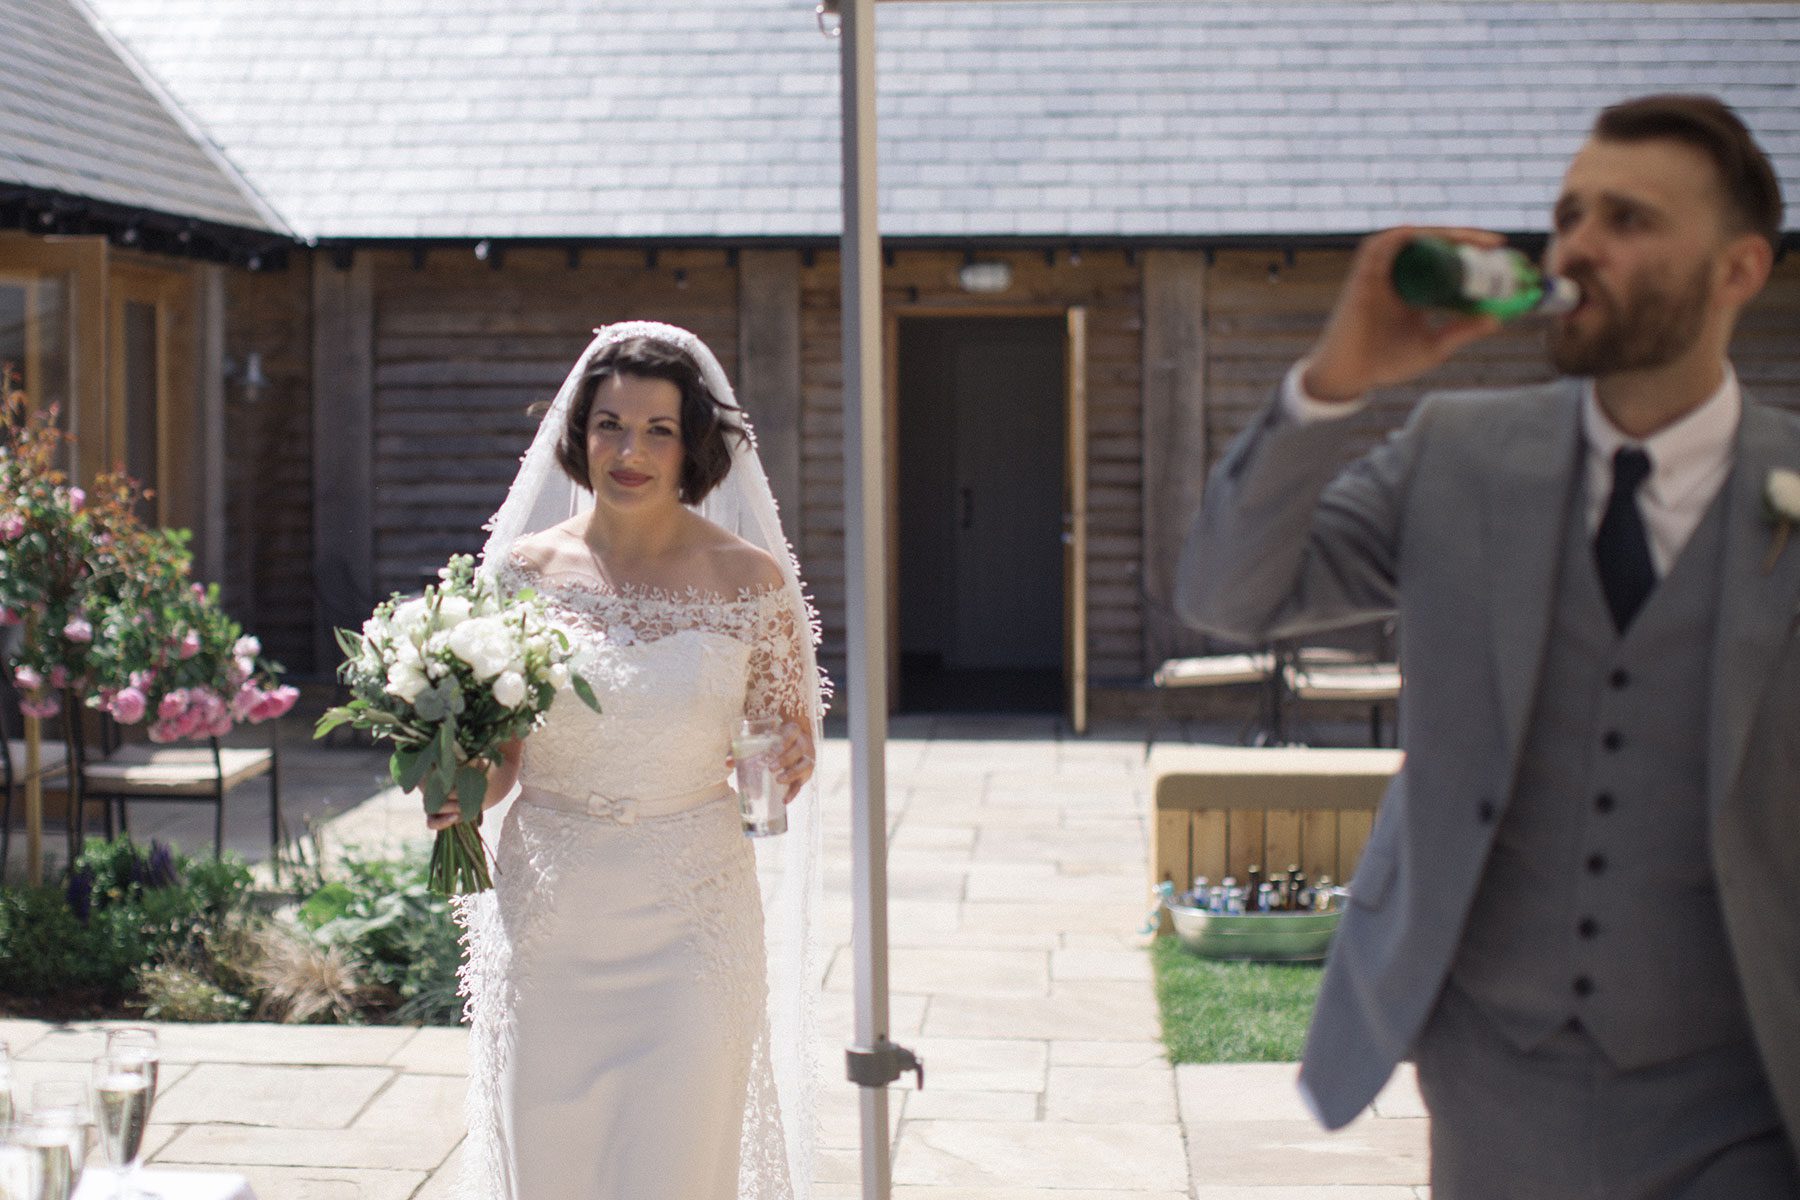 The Courtyard - Reportage Wedding at Upcote Barn | Bullit